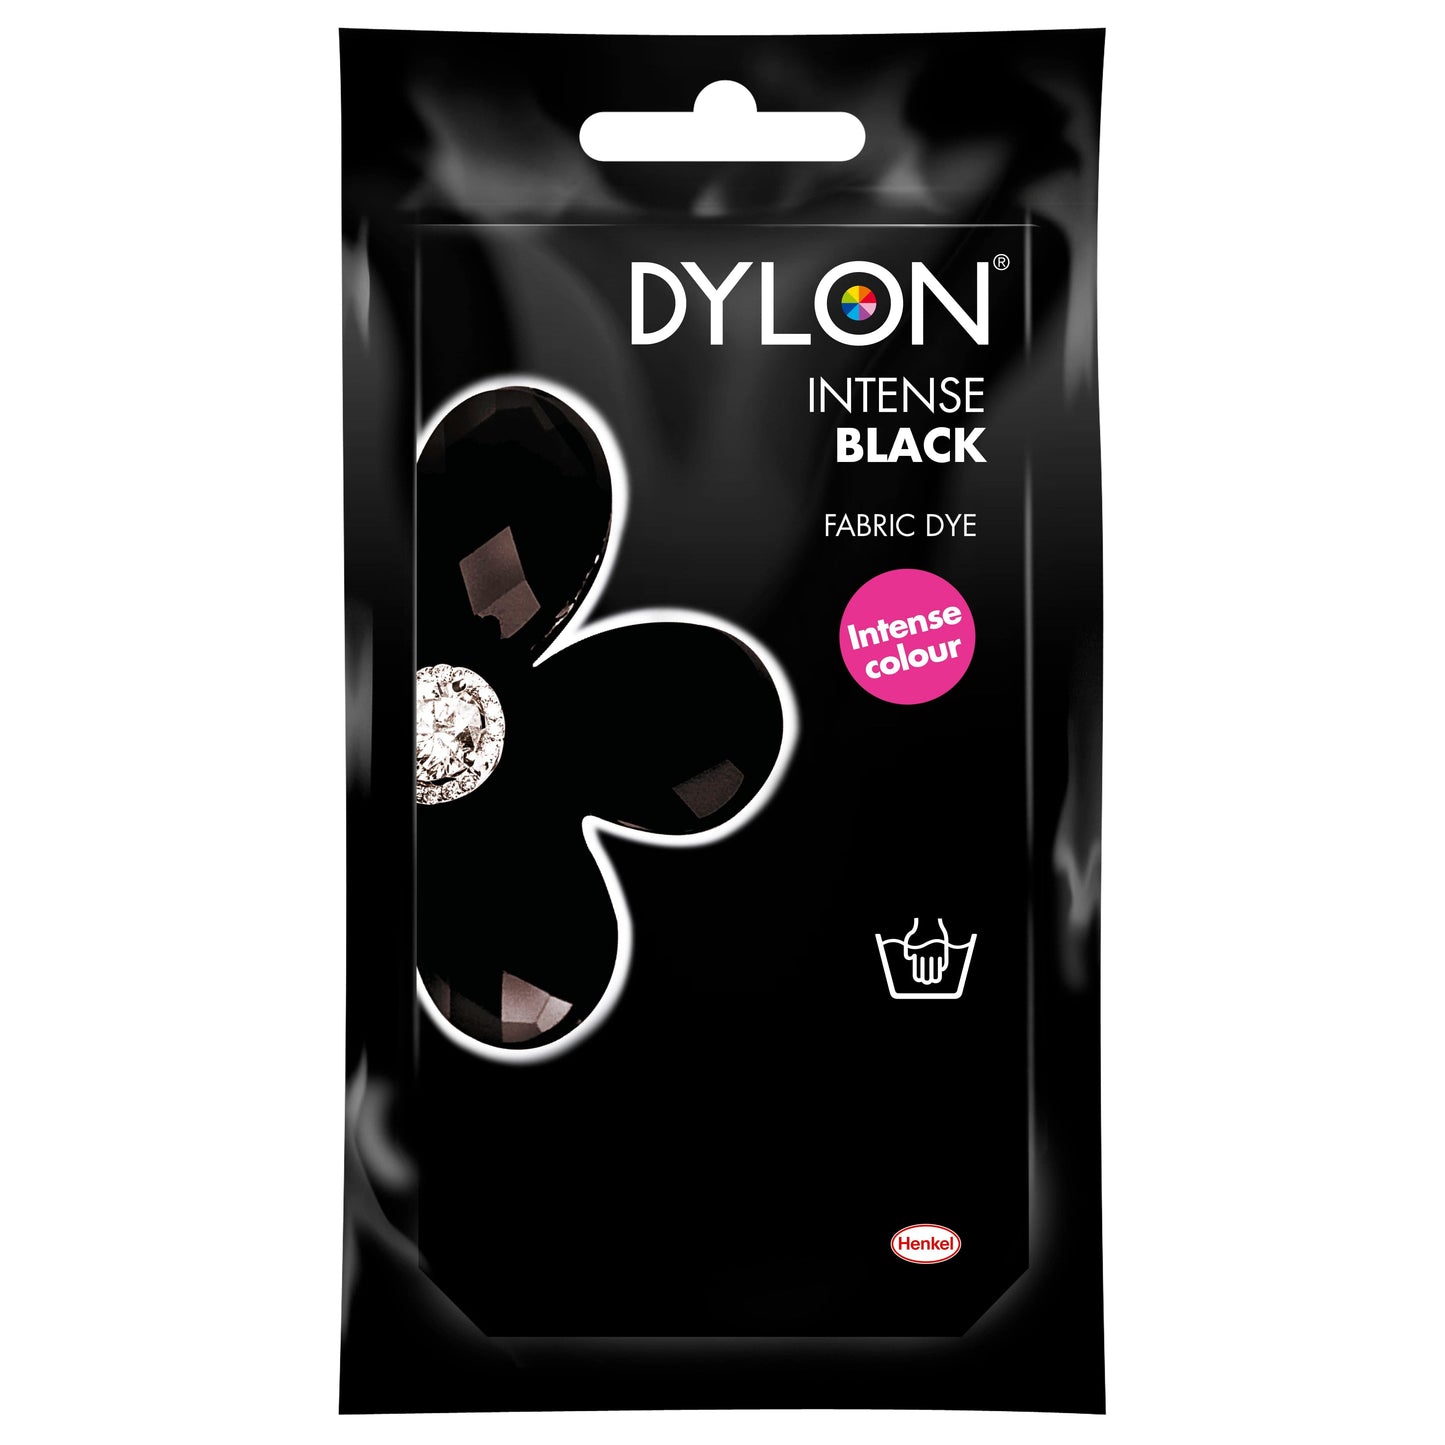 Dylon Hand Dye for Fabric in Intense Black